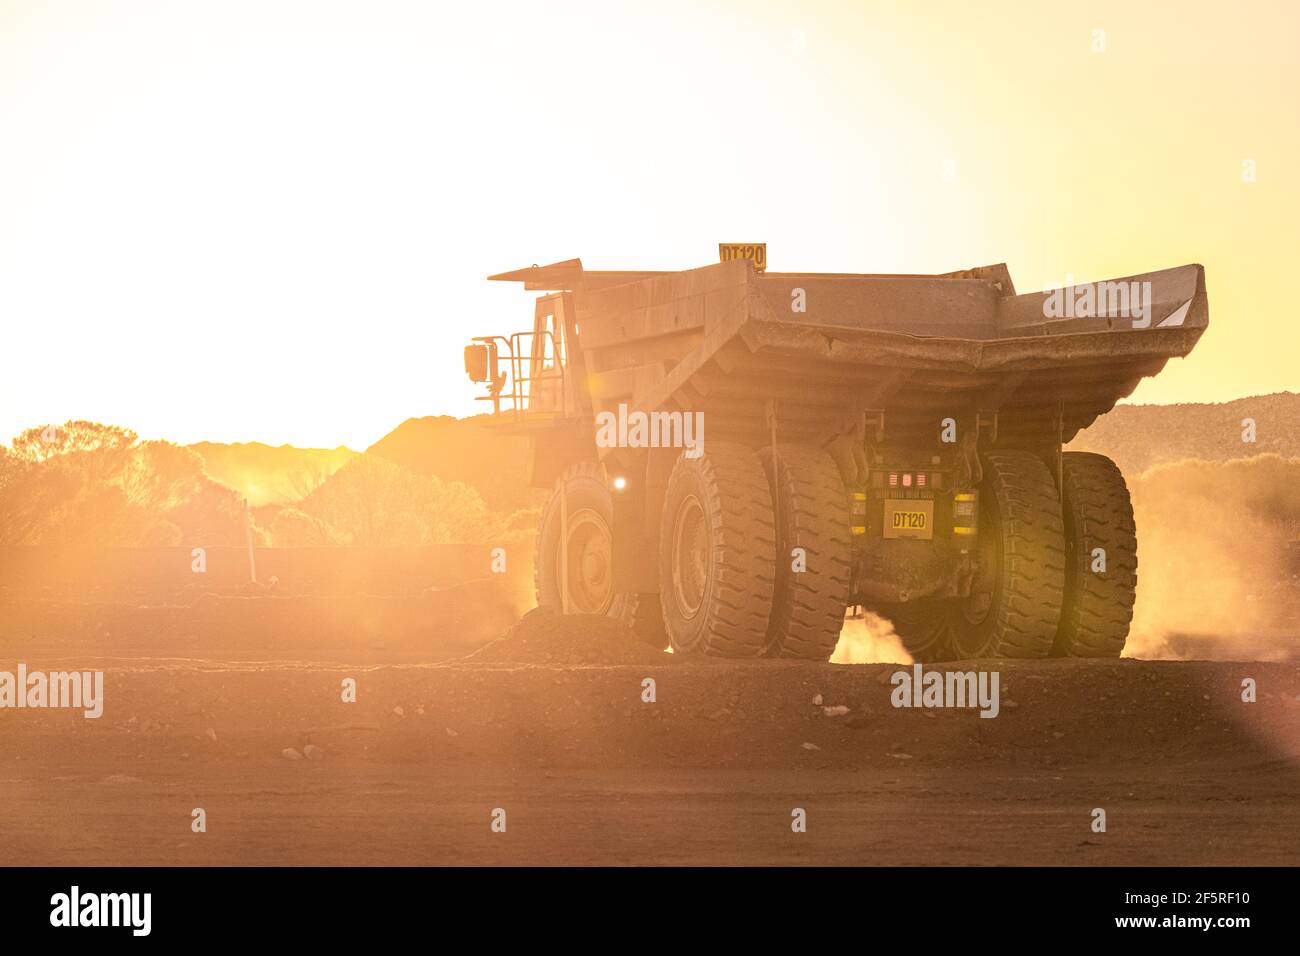 Dump trucks at sunset on mining Go Line in open pit mining area. Stock Photo